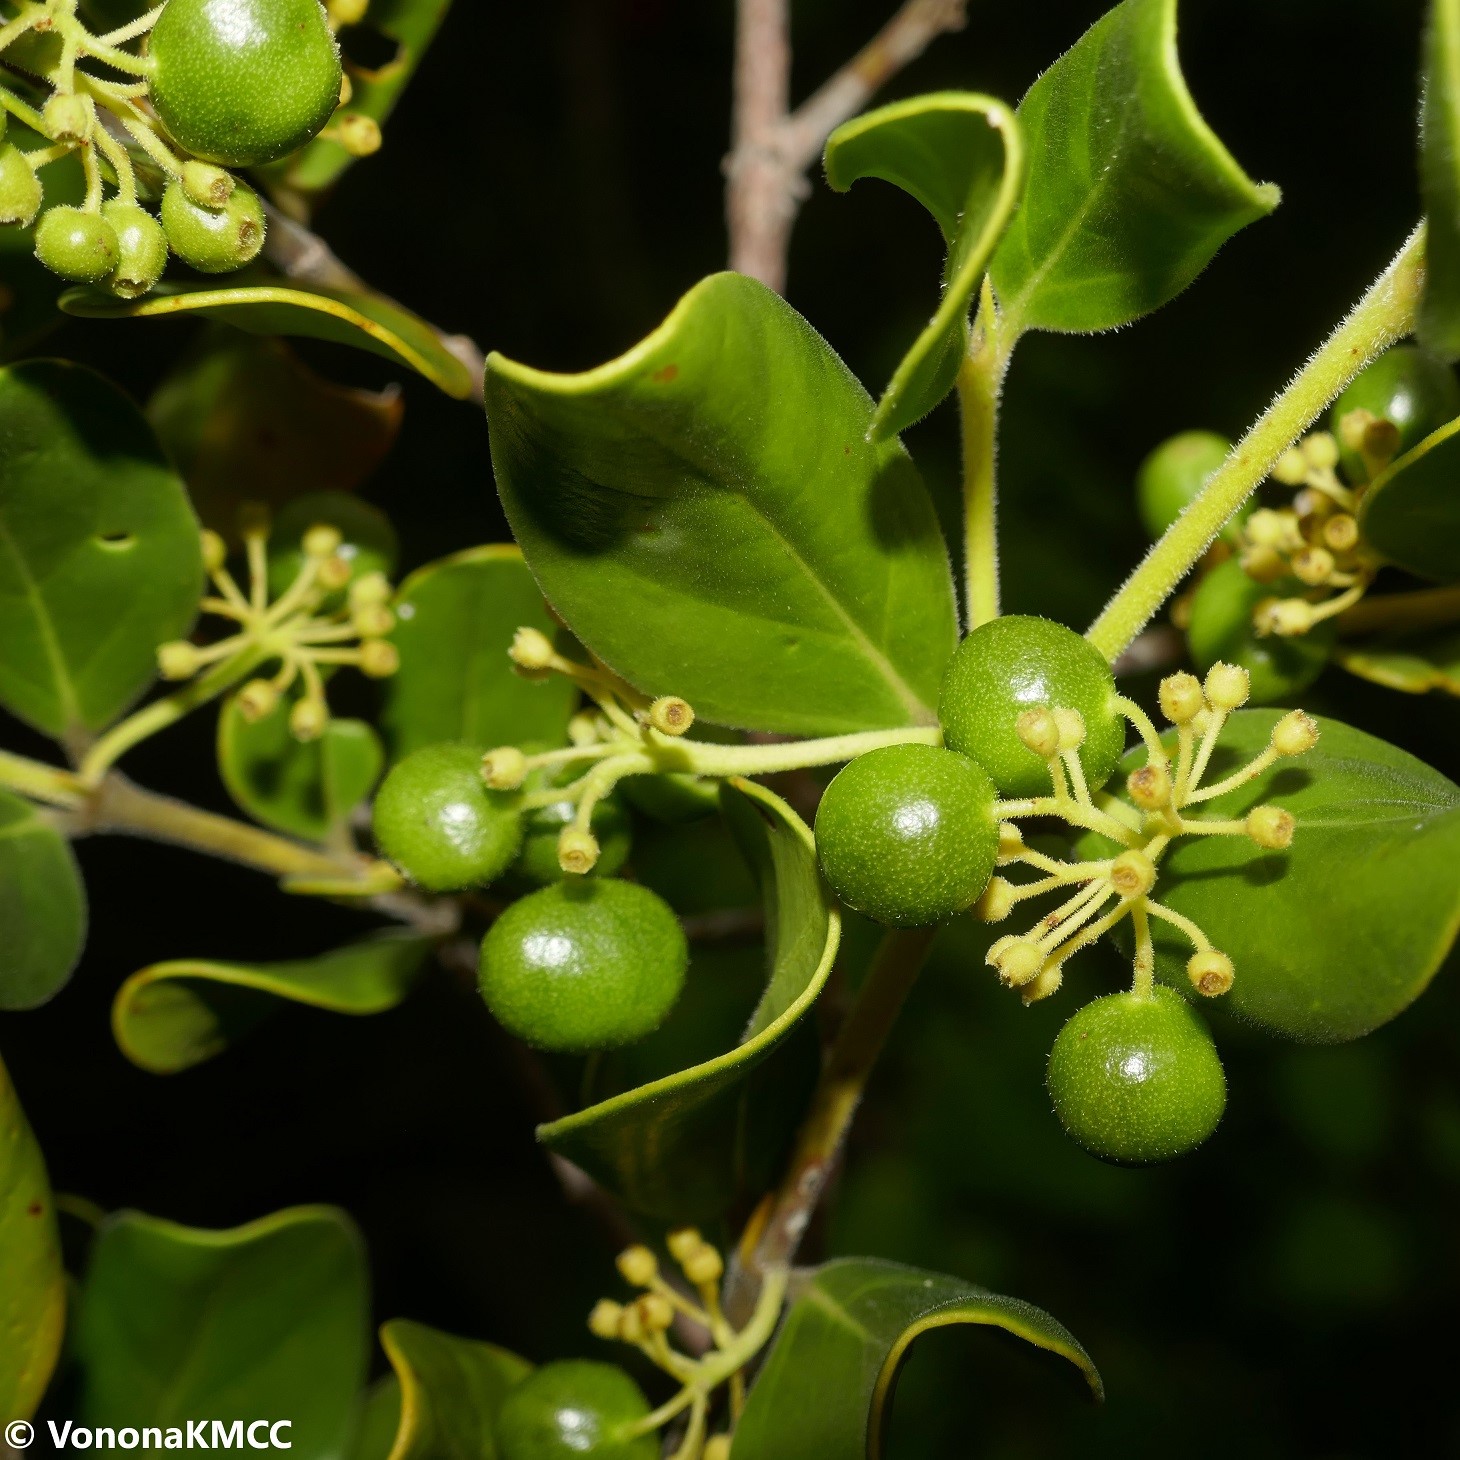 Leaves and small round green fruits Psydrax sambiranesis